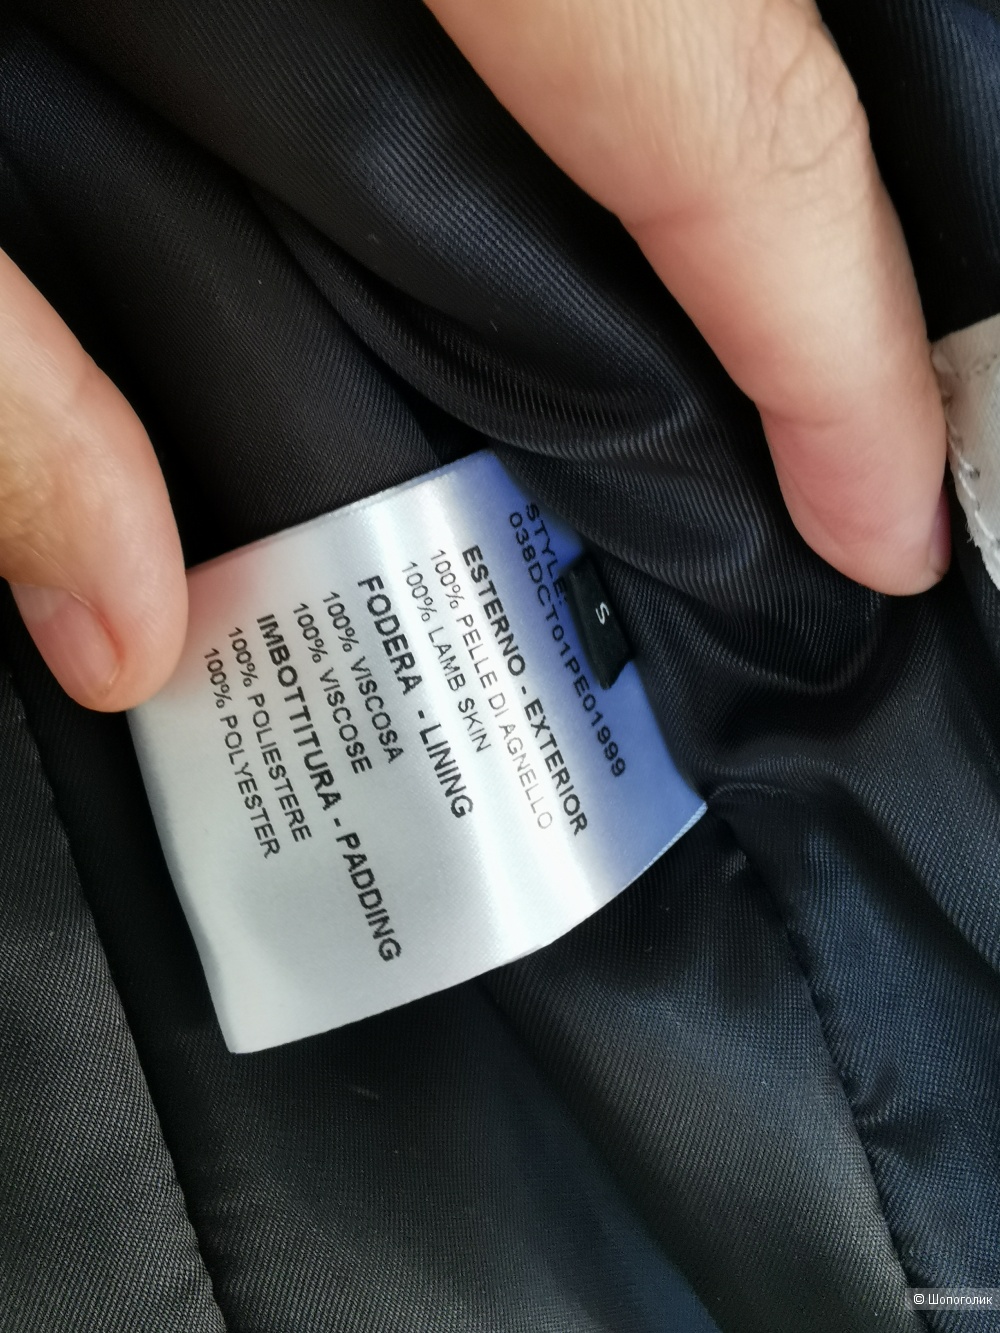 Кожаная куртка бренда 8 от Yoox размер S